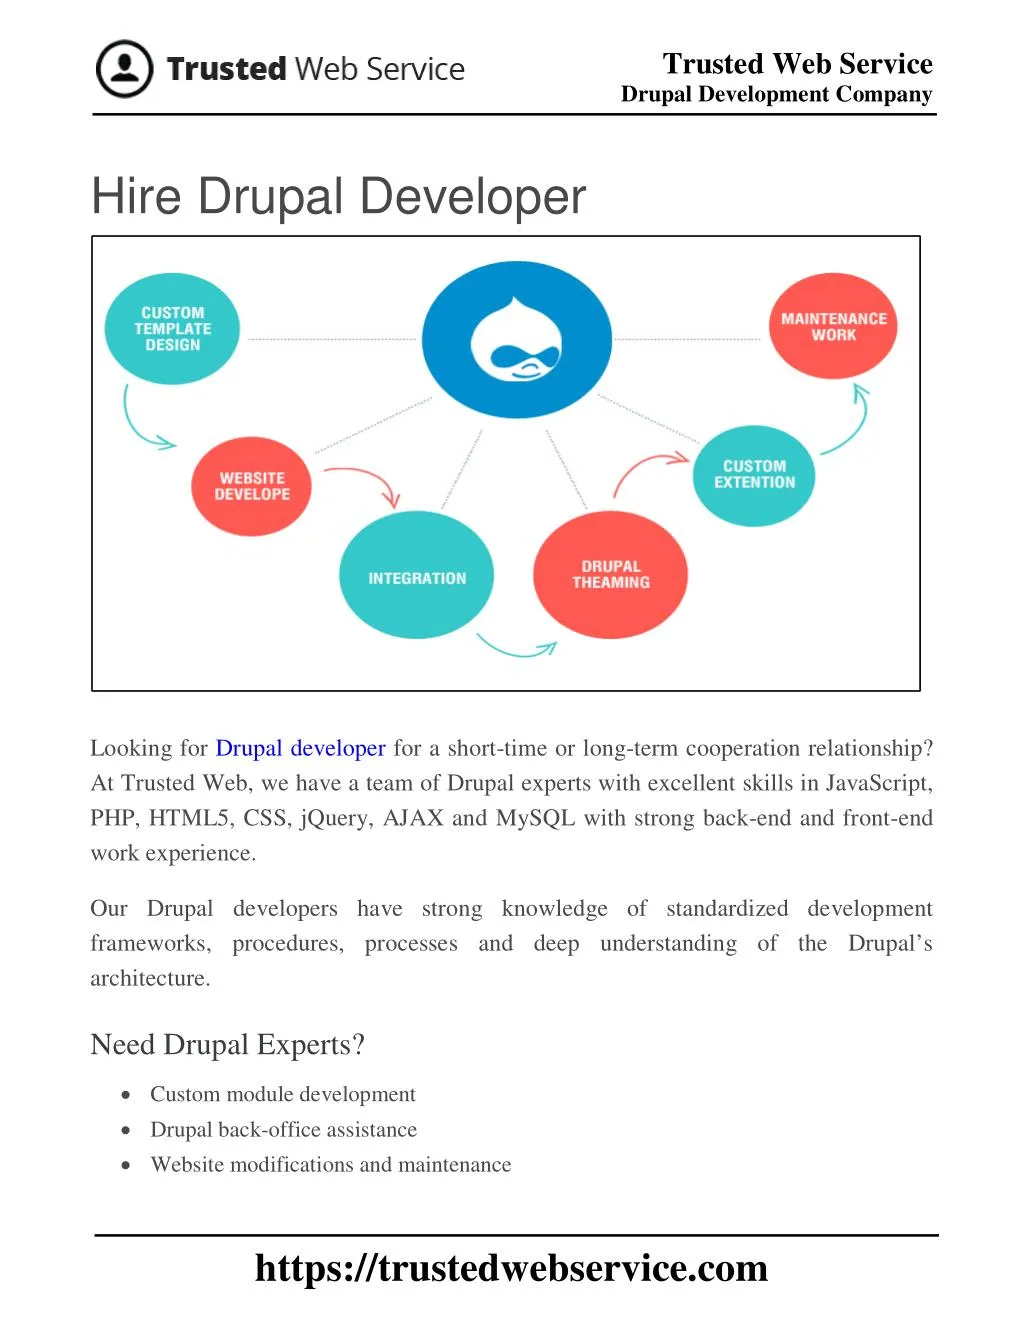 trusted web service drupal development company